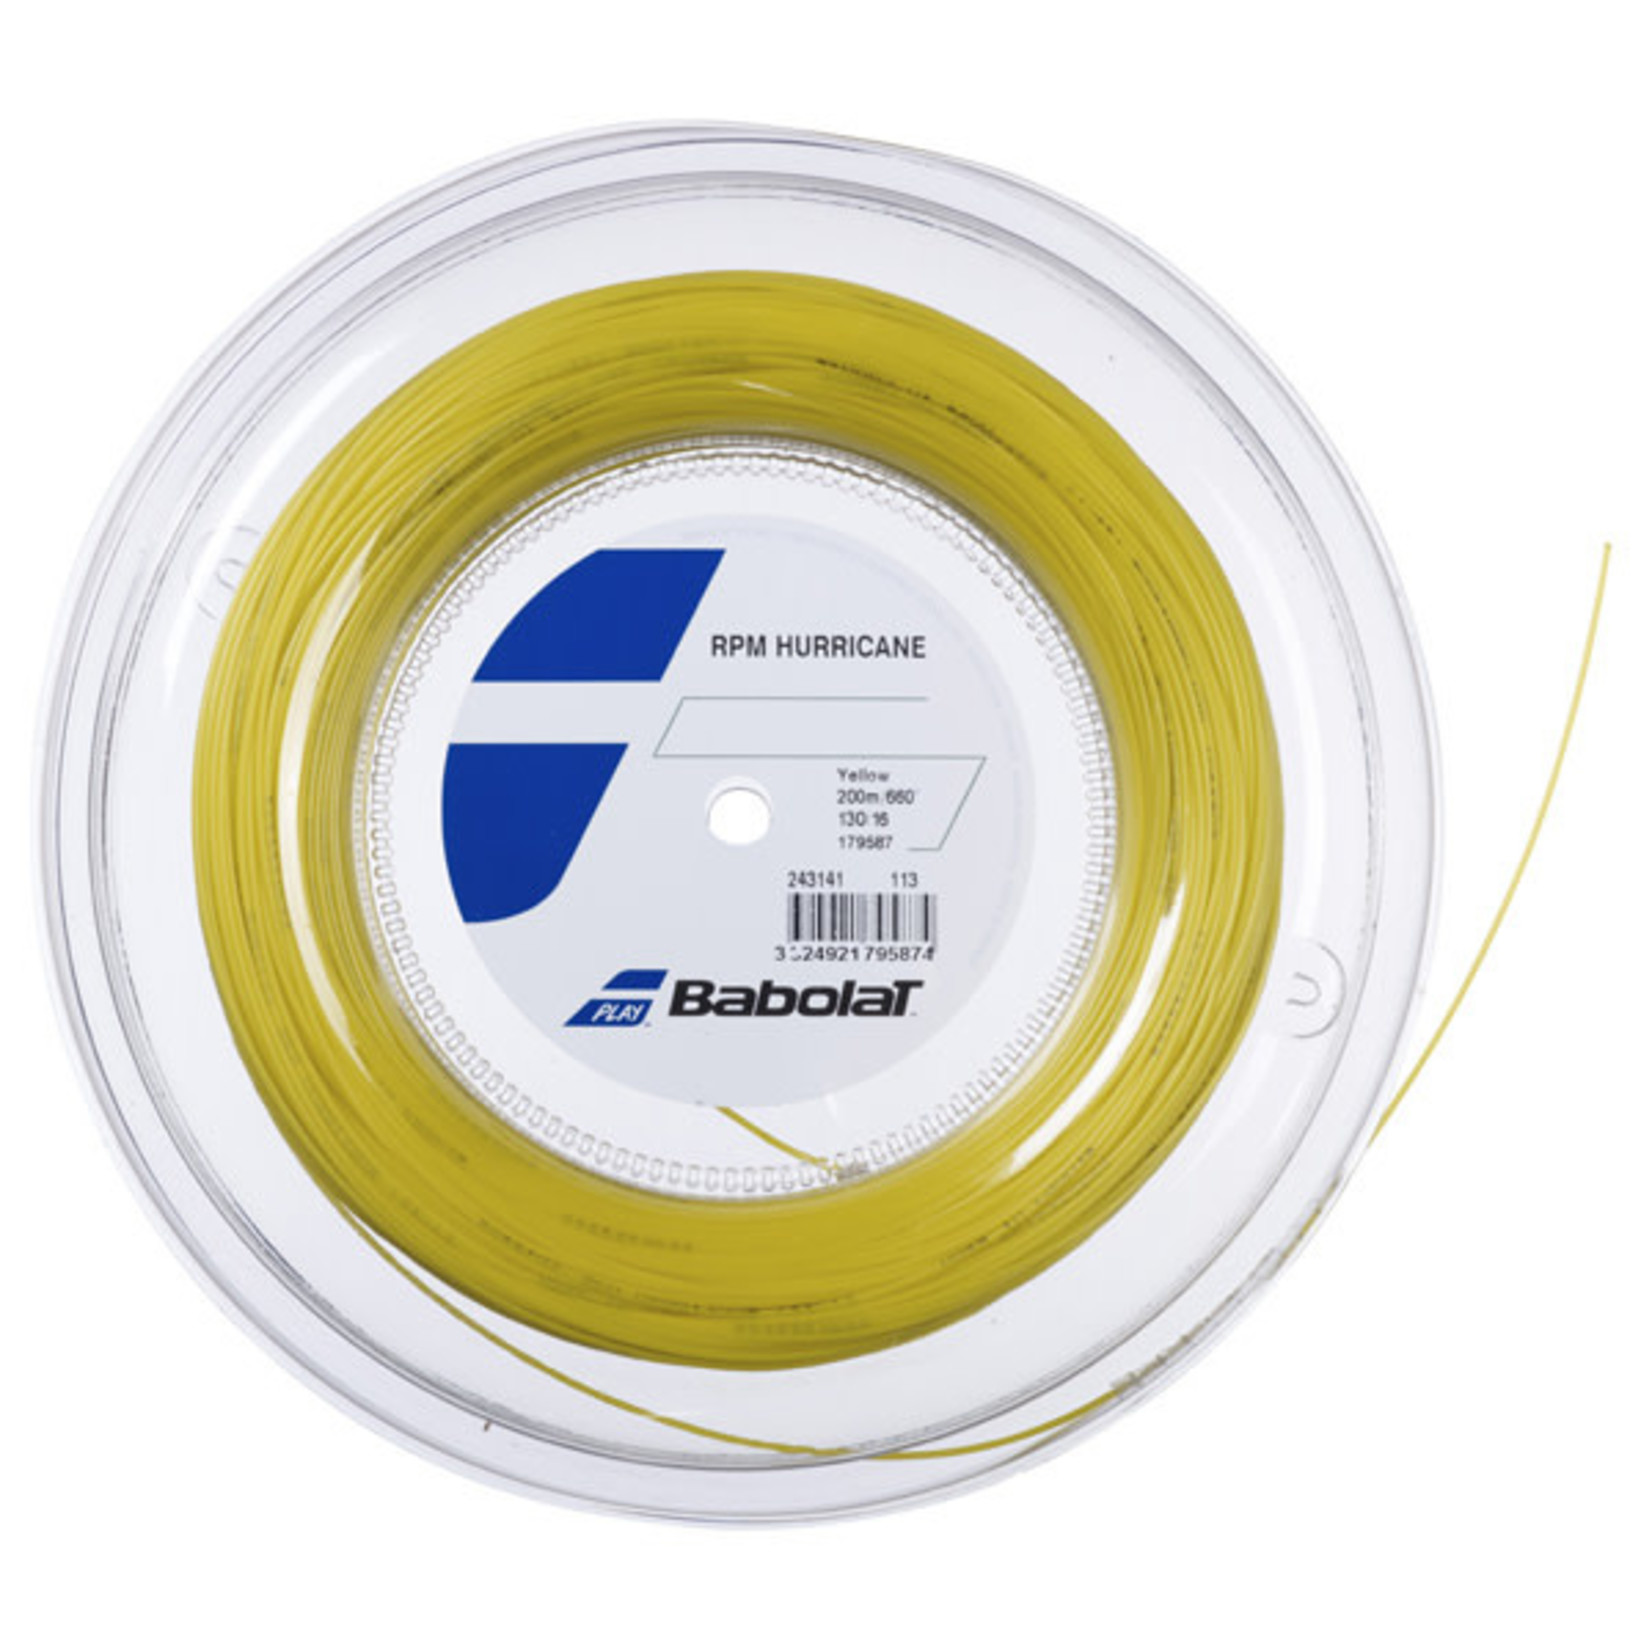 Babolat Babolat RPM Hurricane Tennis String Reels (200m)